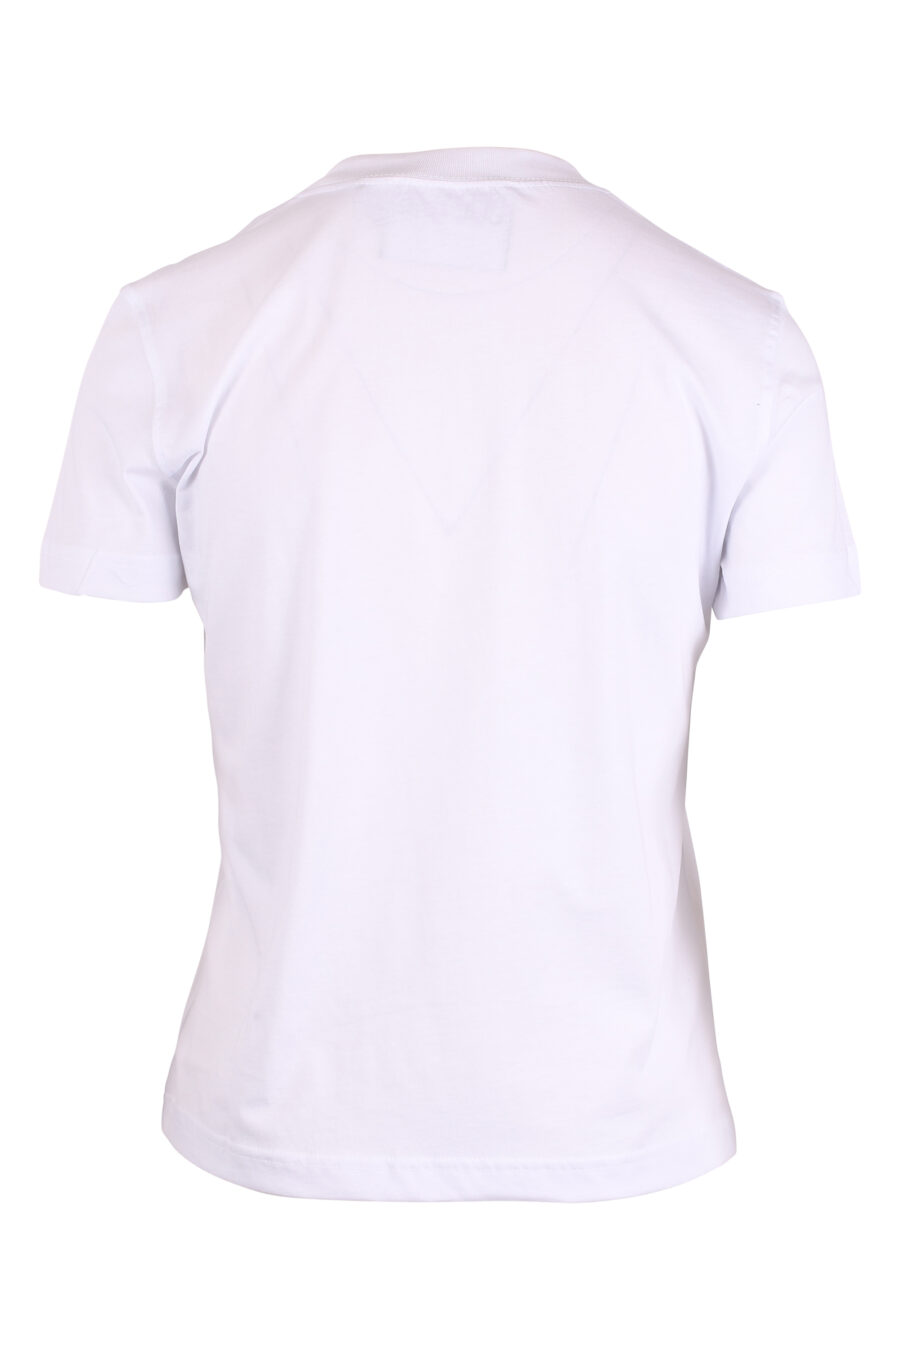 Camiseta blanca con logo plateado grande - IMG 4368